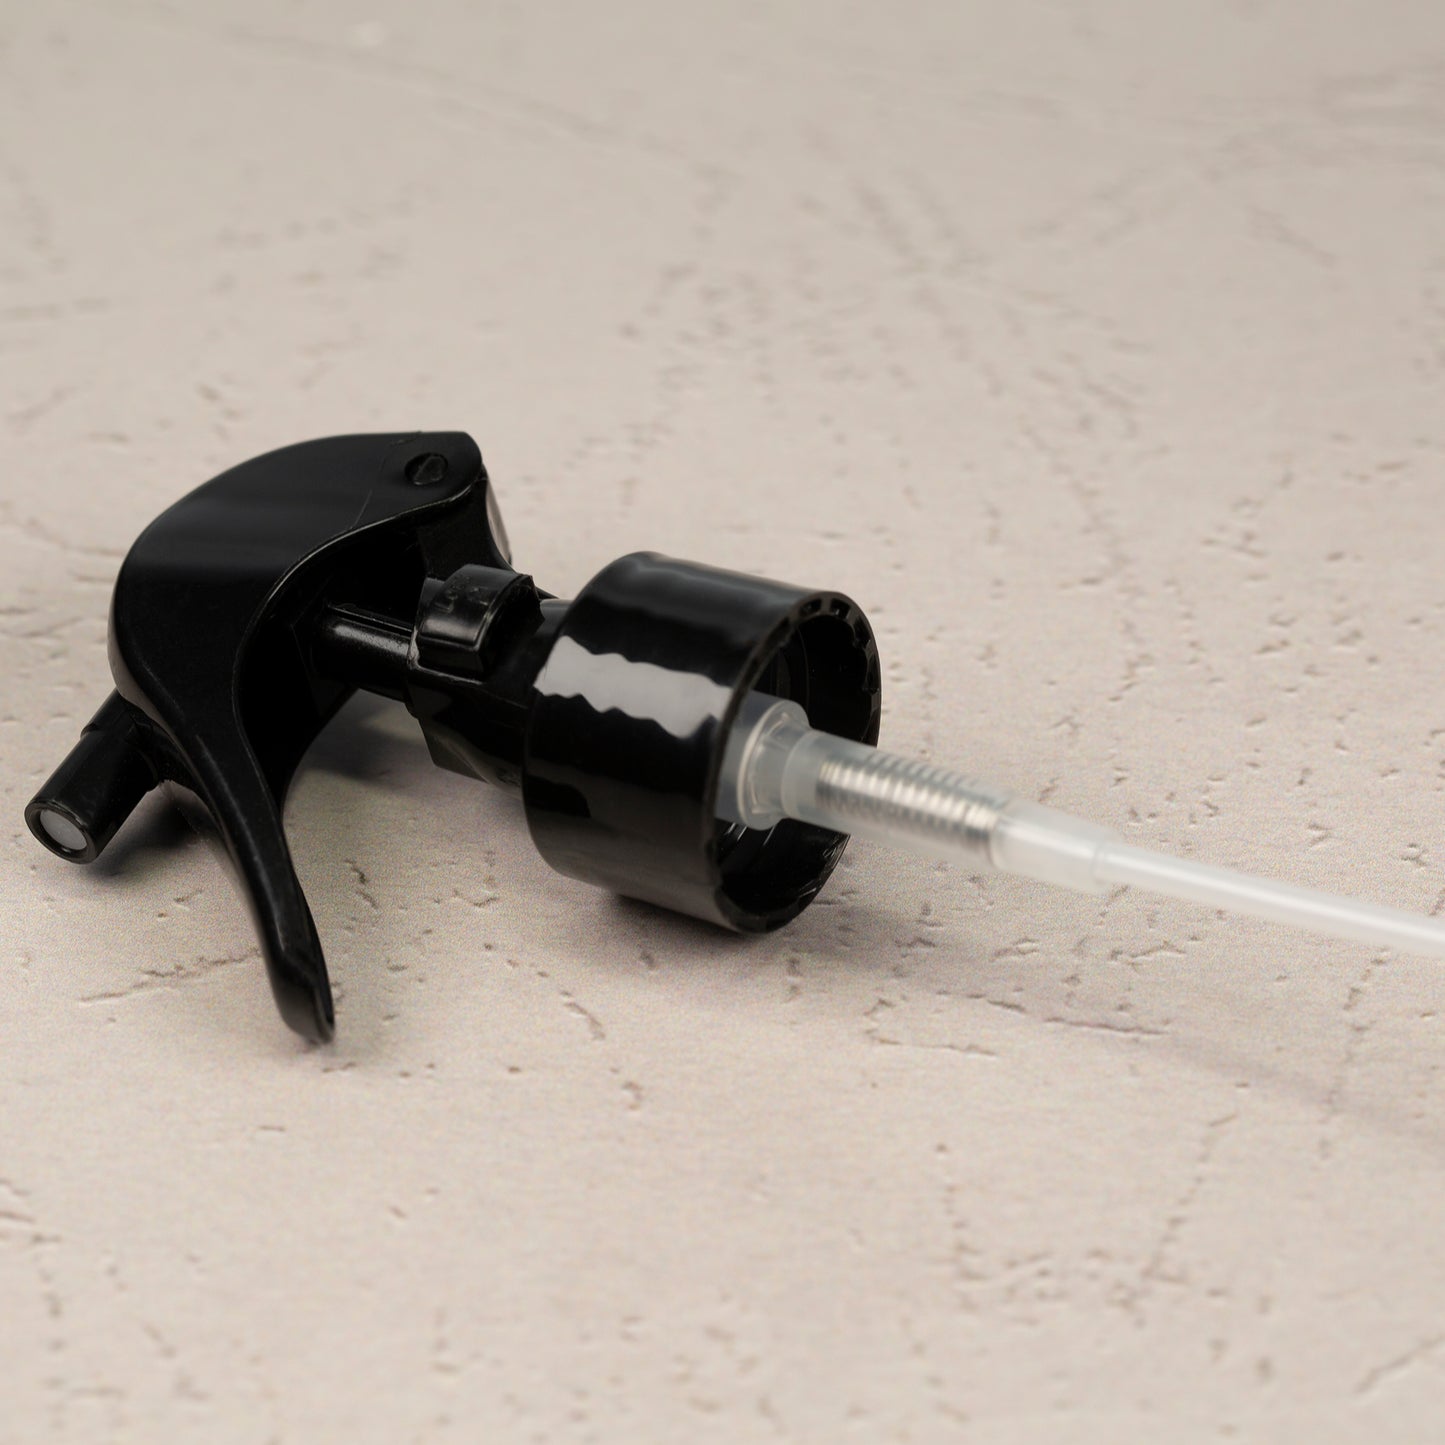 24-410 Black Mini Trigger Sprayer